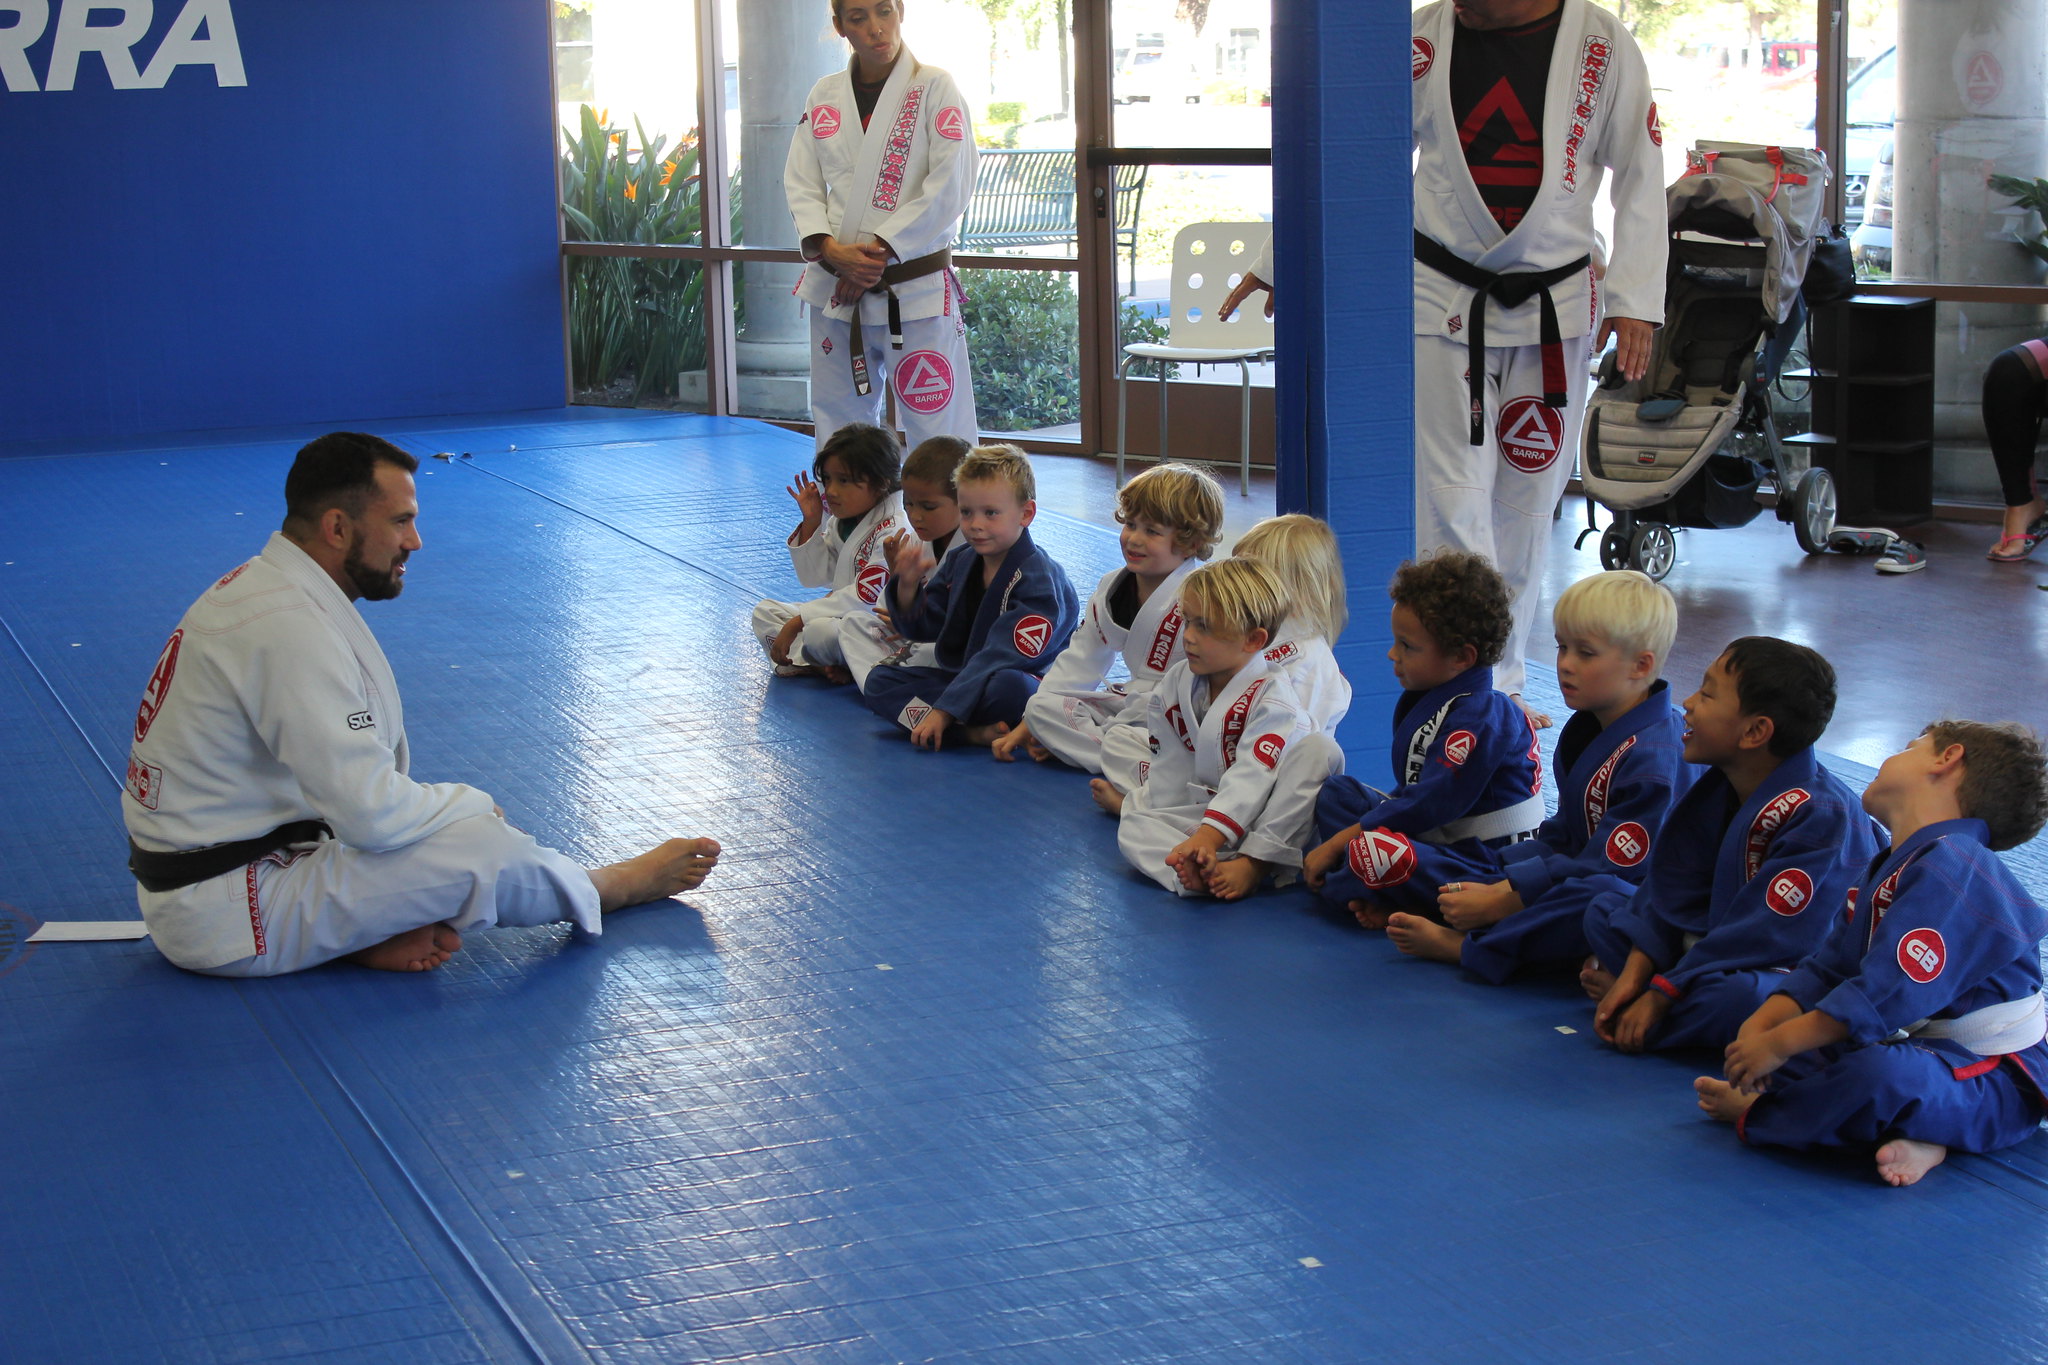 kids' jiu jitsu - children's jiu jitsu classes